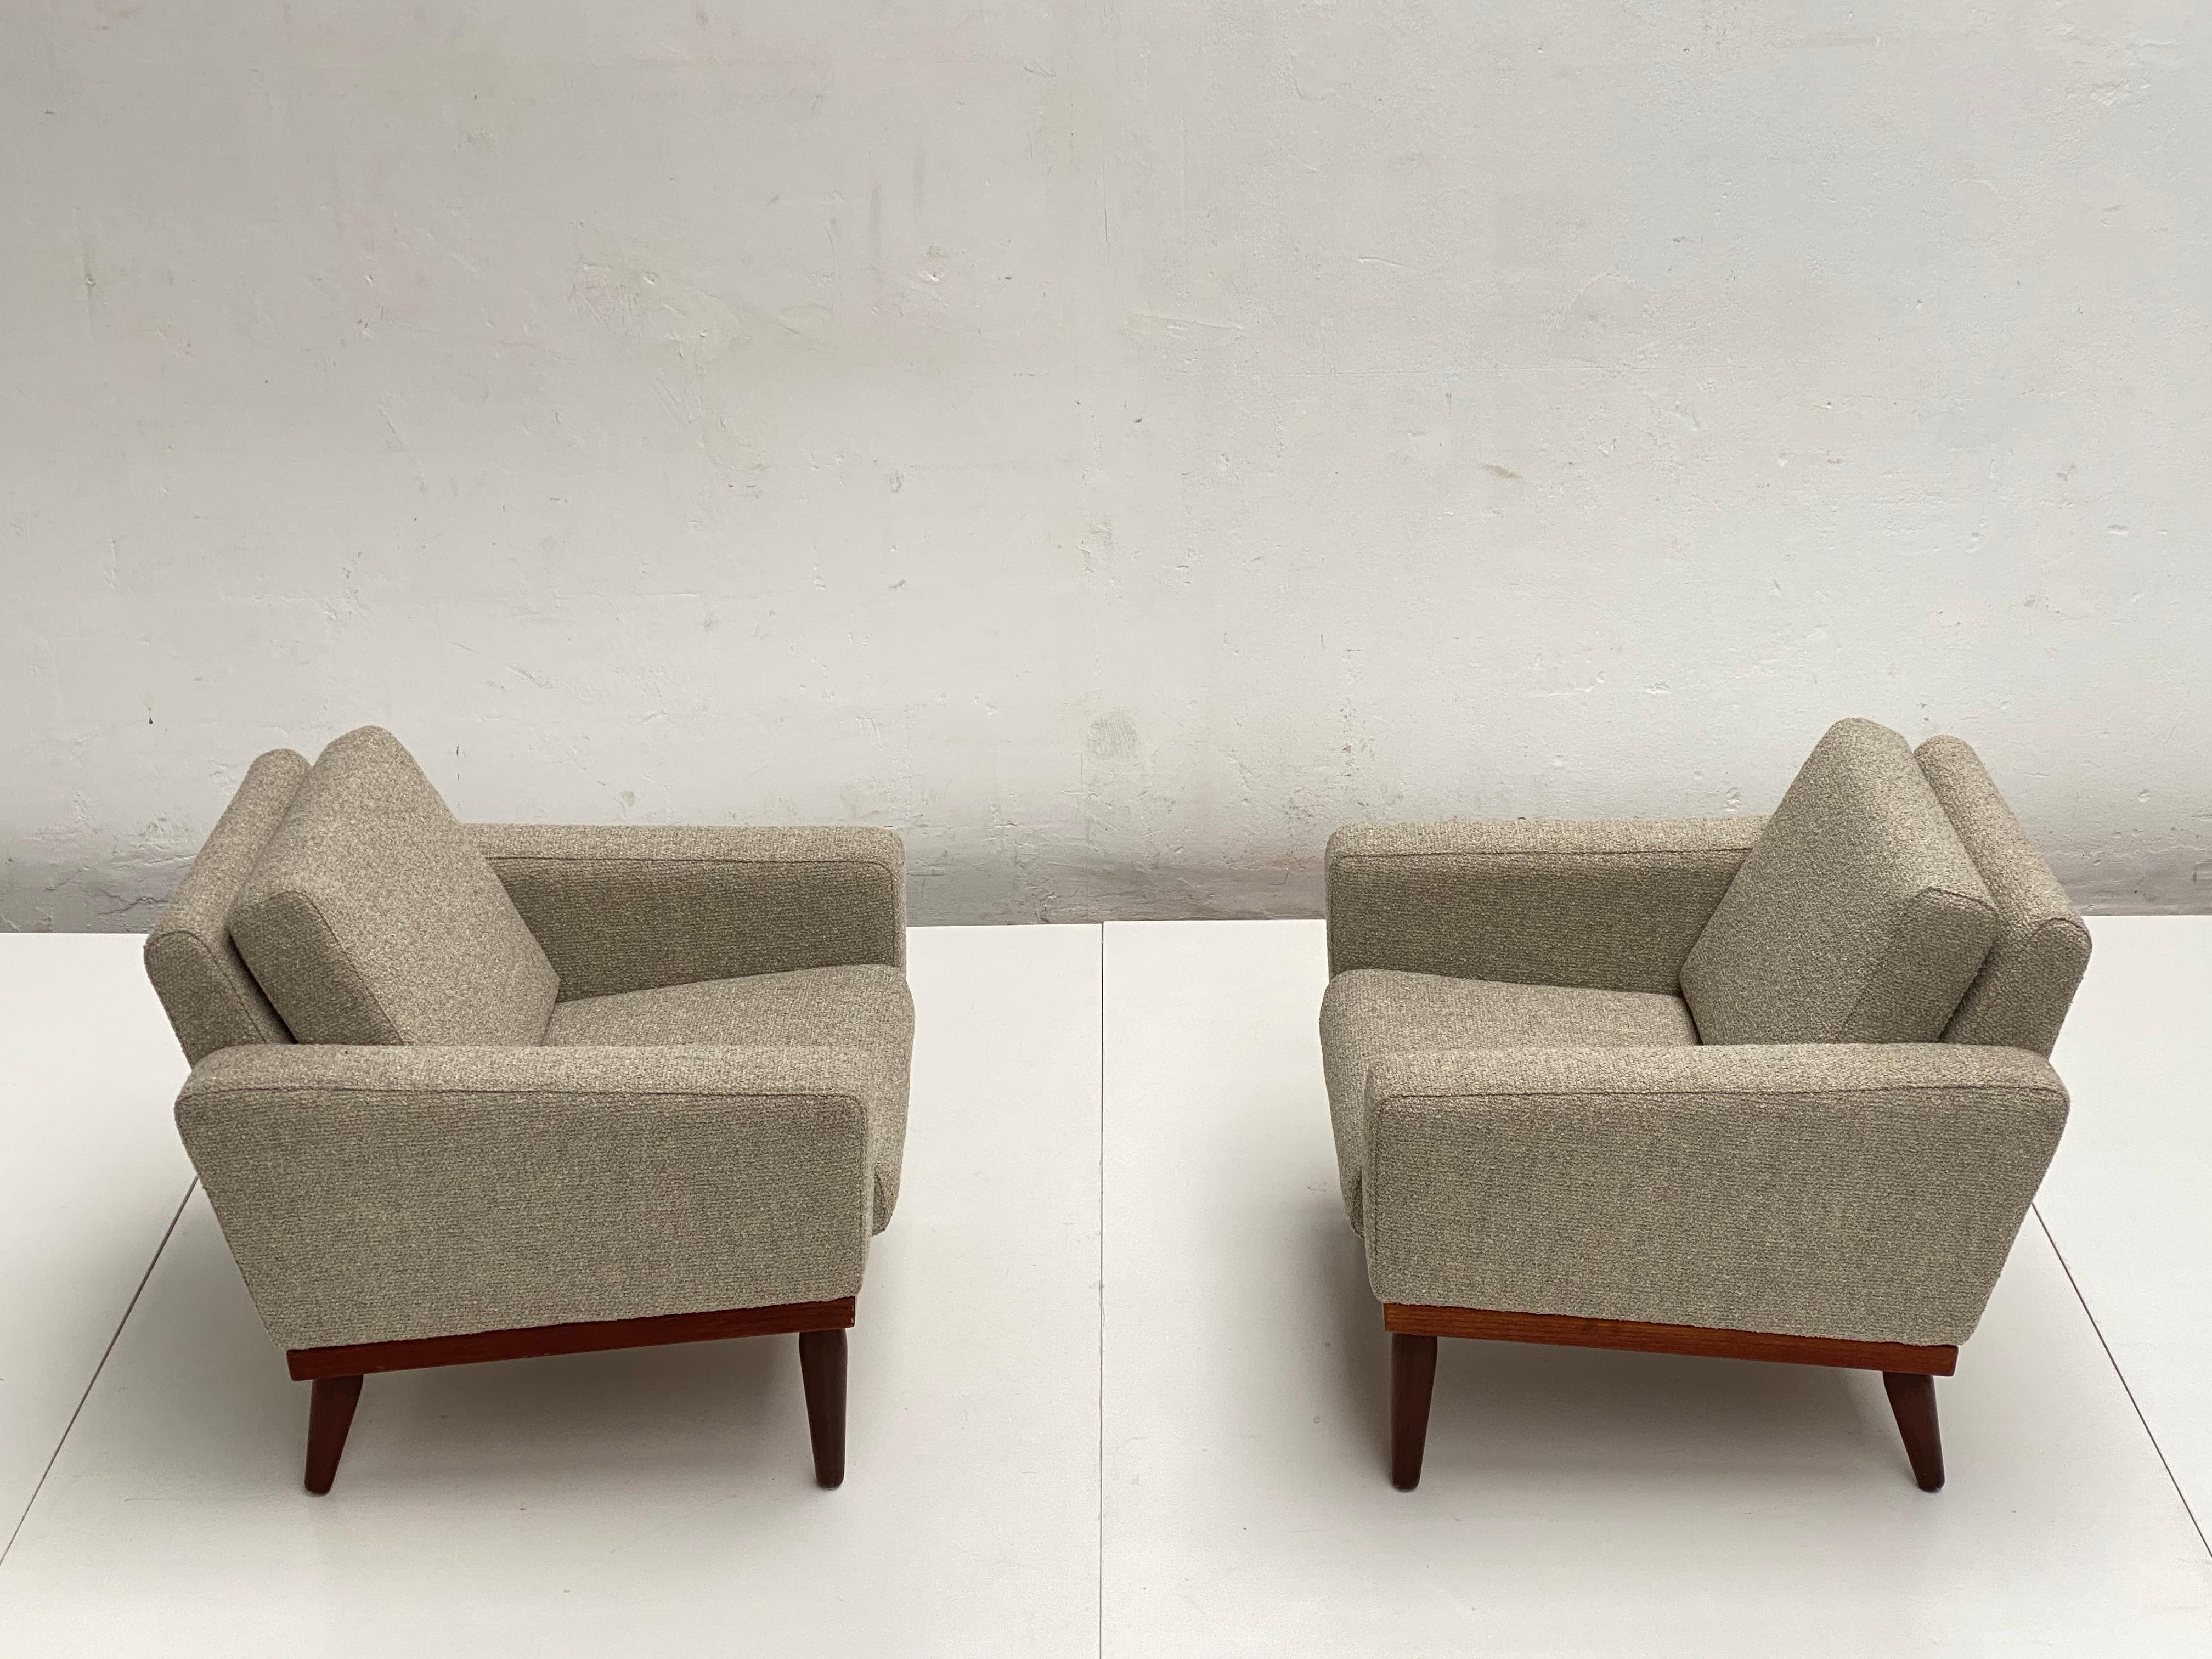 Pair of Danish Teak 1950s Lounge Chairs Bovenkamp The Netherlands New Upholstery For Sale 6